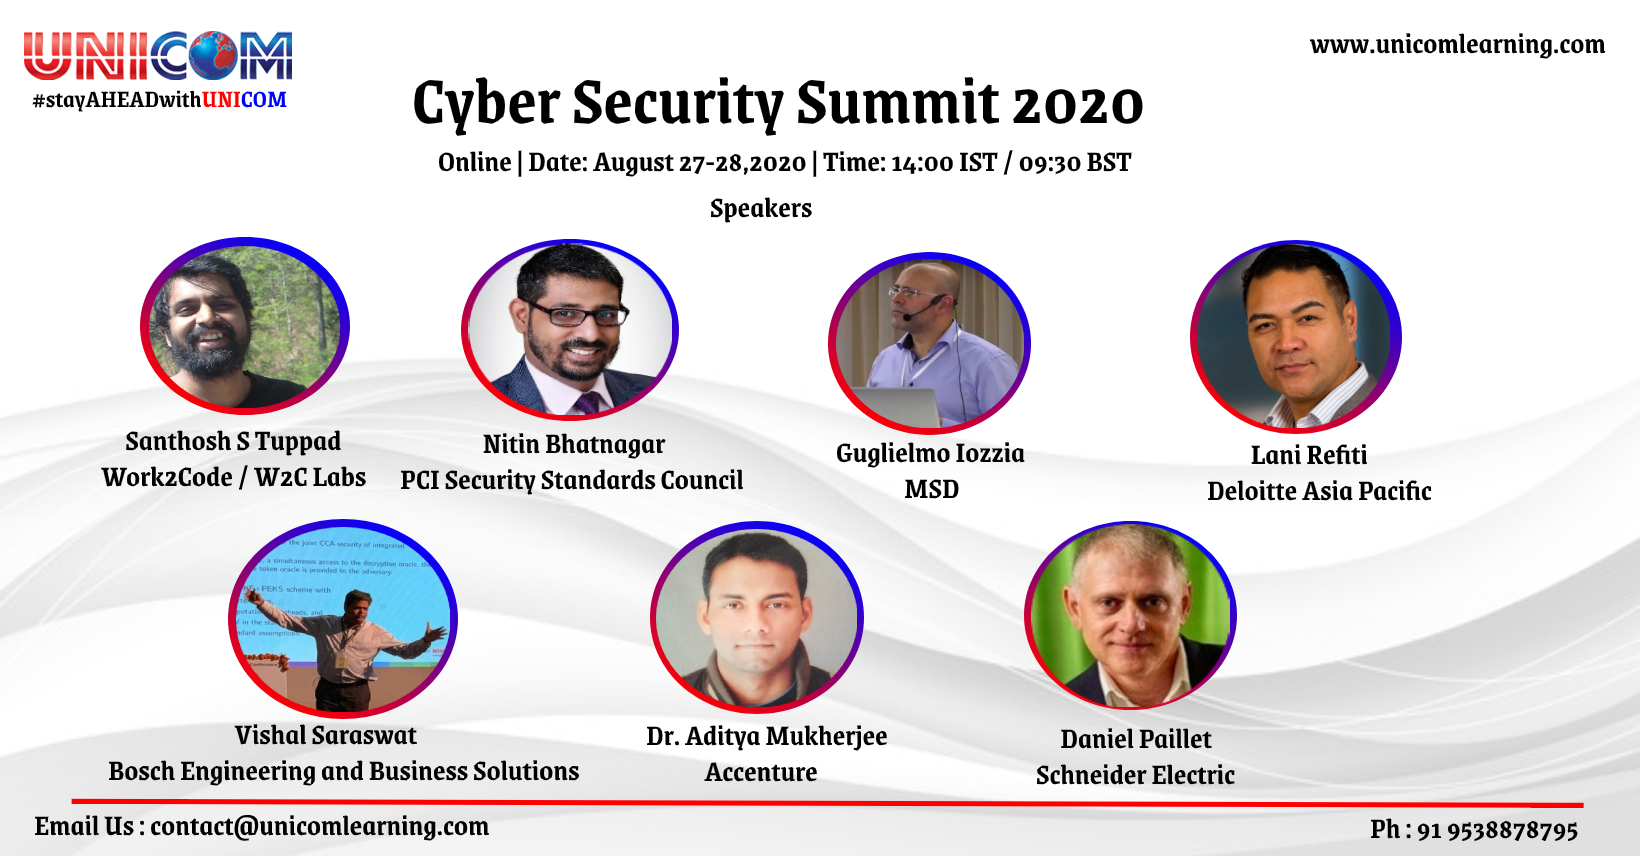 CYBER SECURITY SUMMIT 2020, Bangalore, Karnataka, India